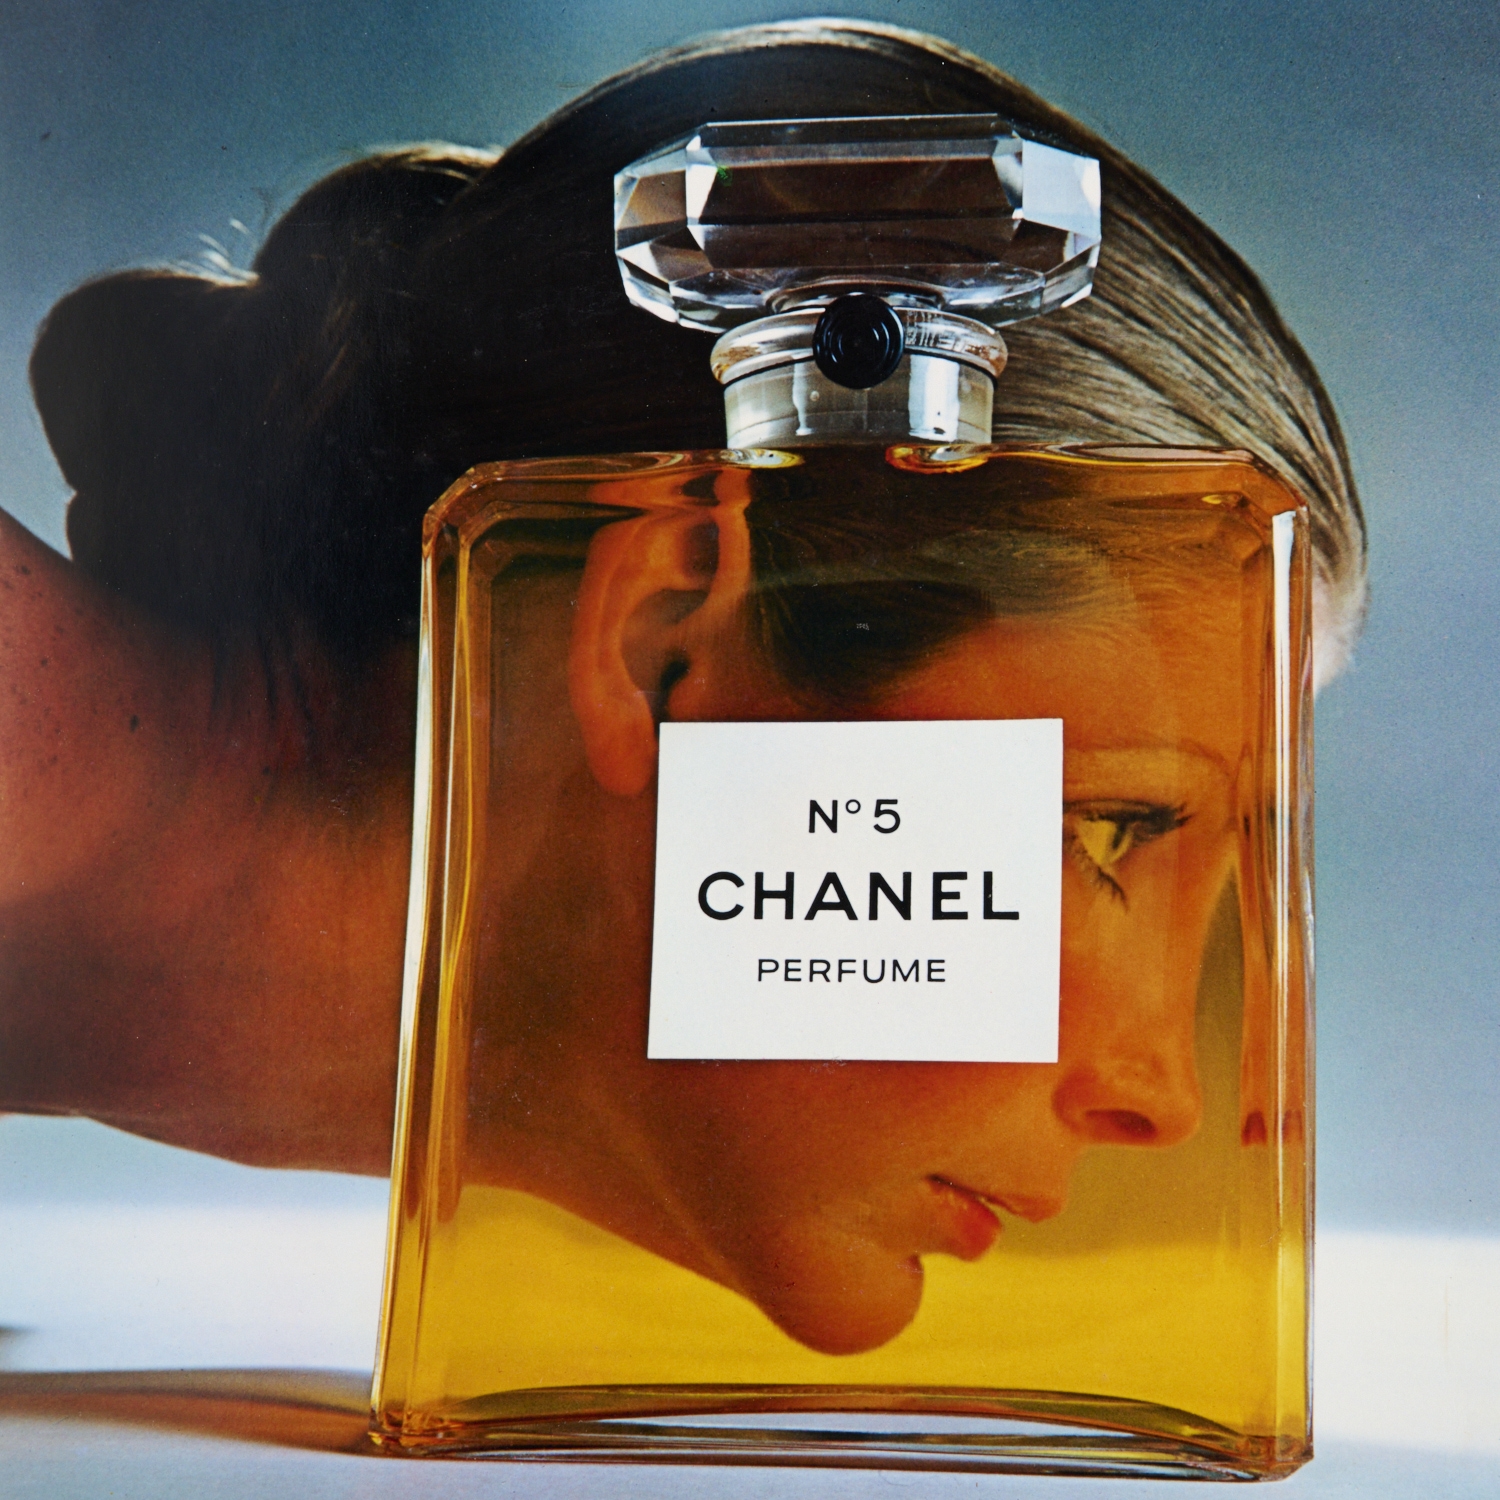 Richard Avedon  Chanel perfume ad featuring Catherine Deneuve